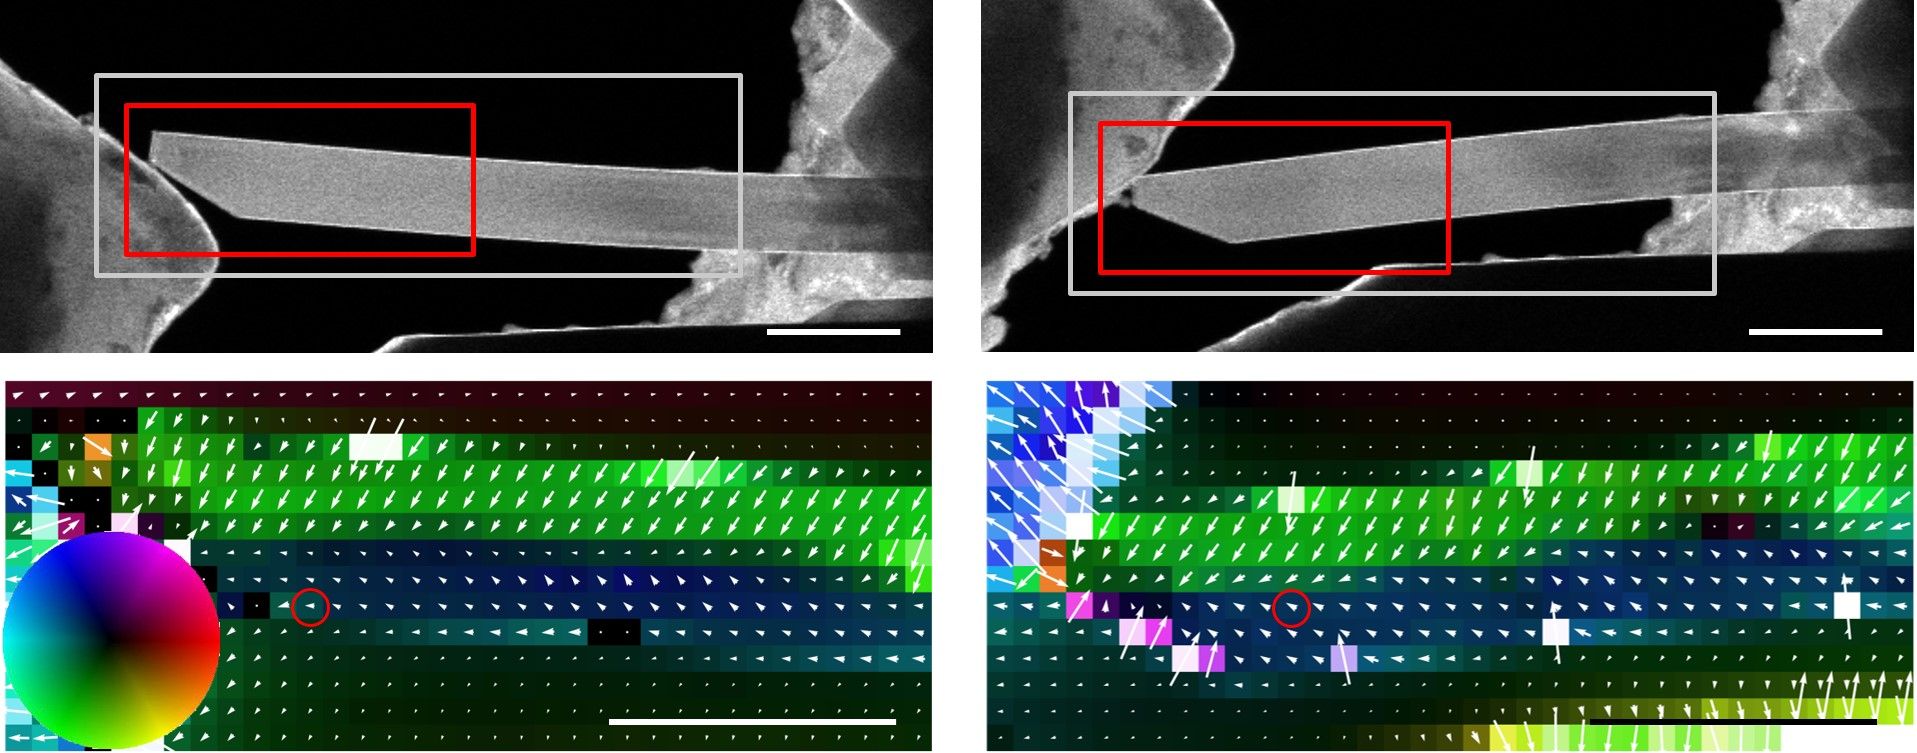 Electron beam deflection measured at a bending GaN nanowire